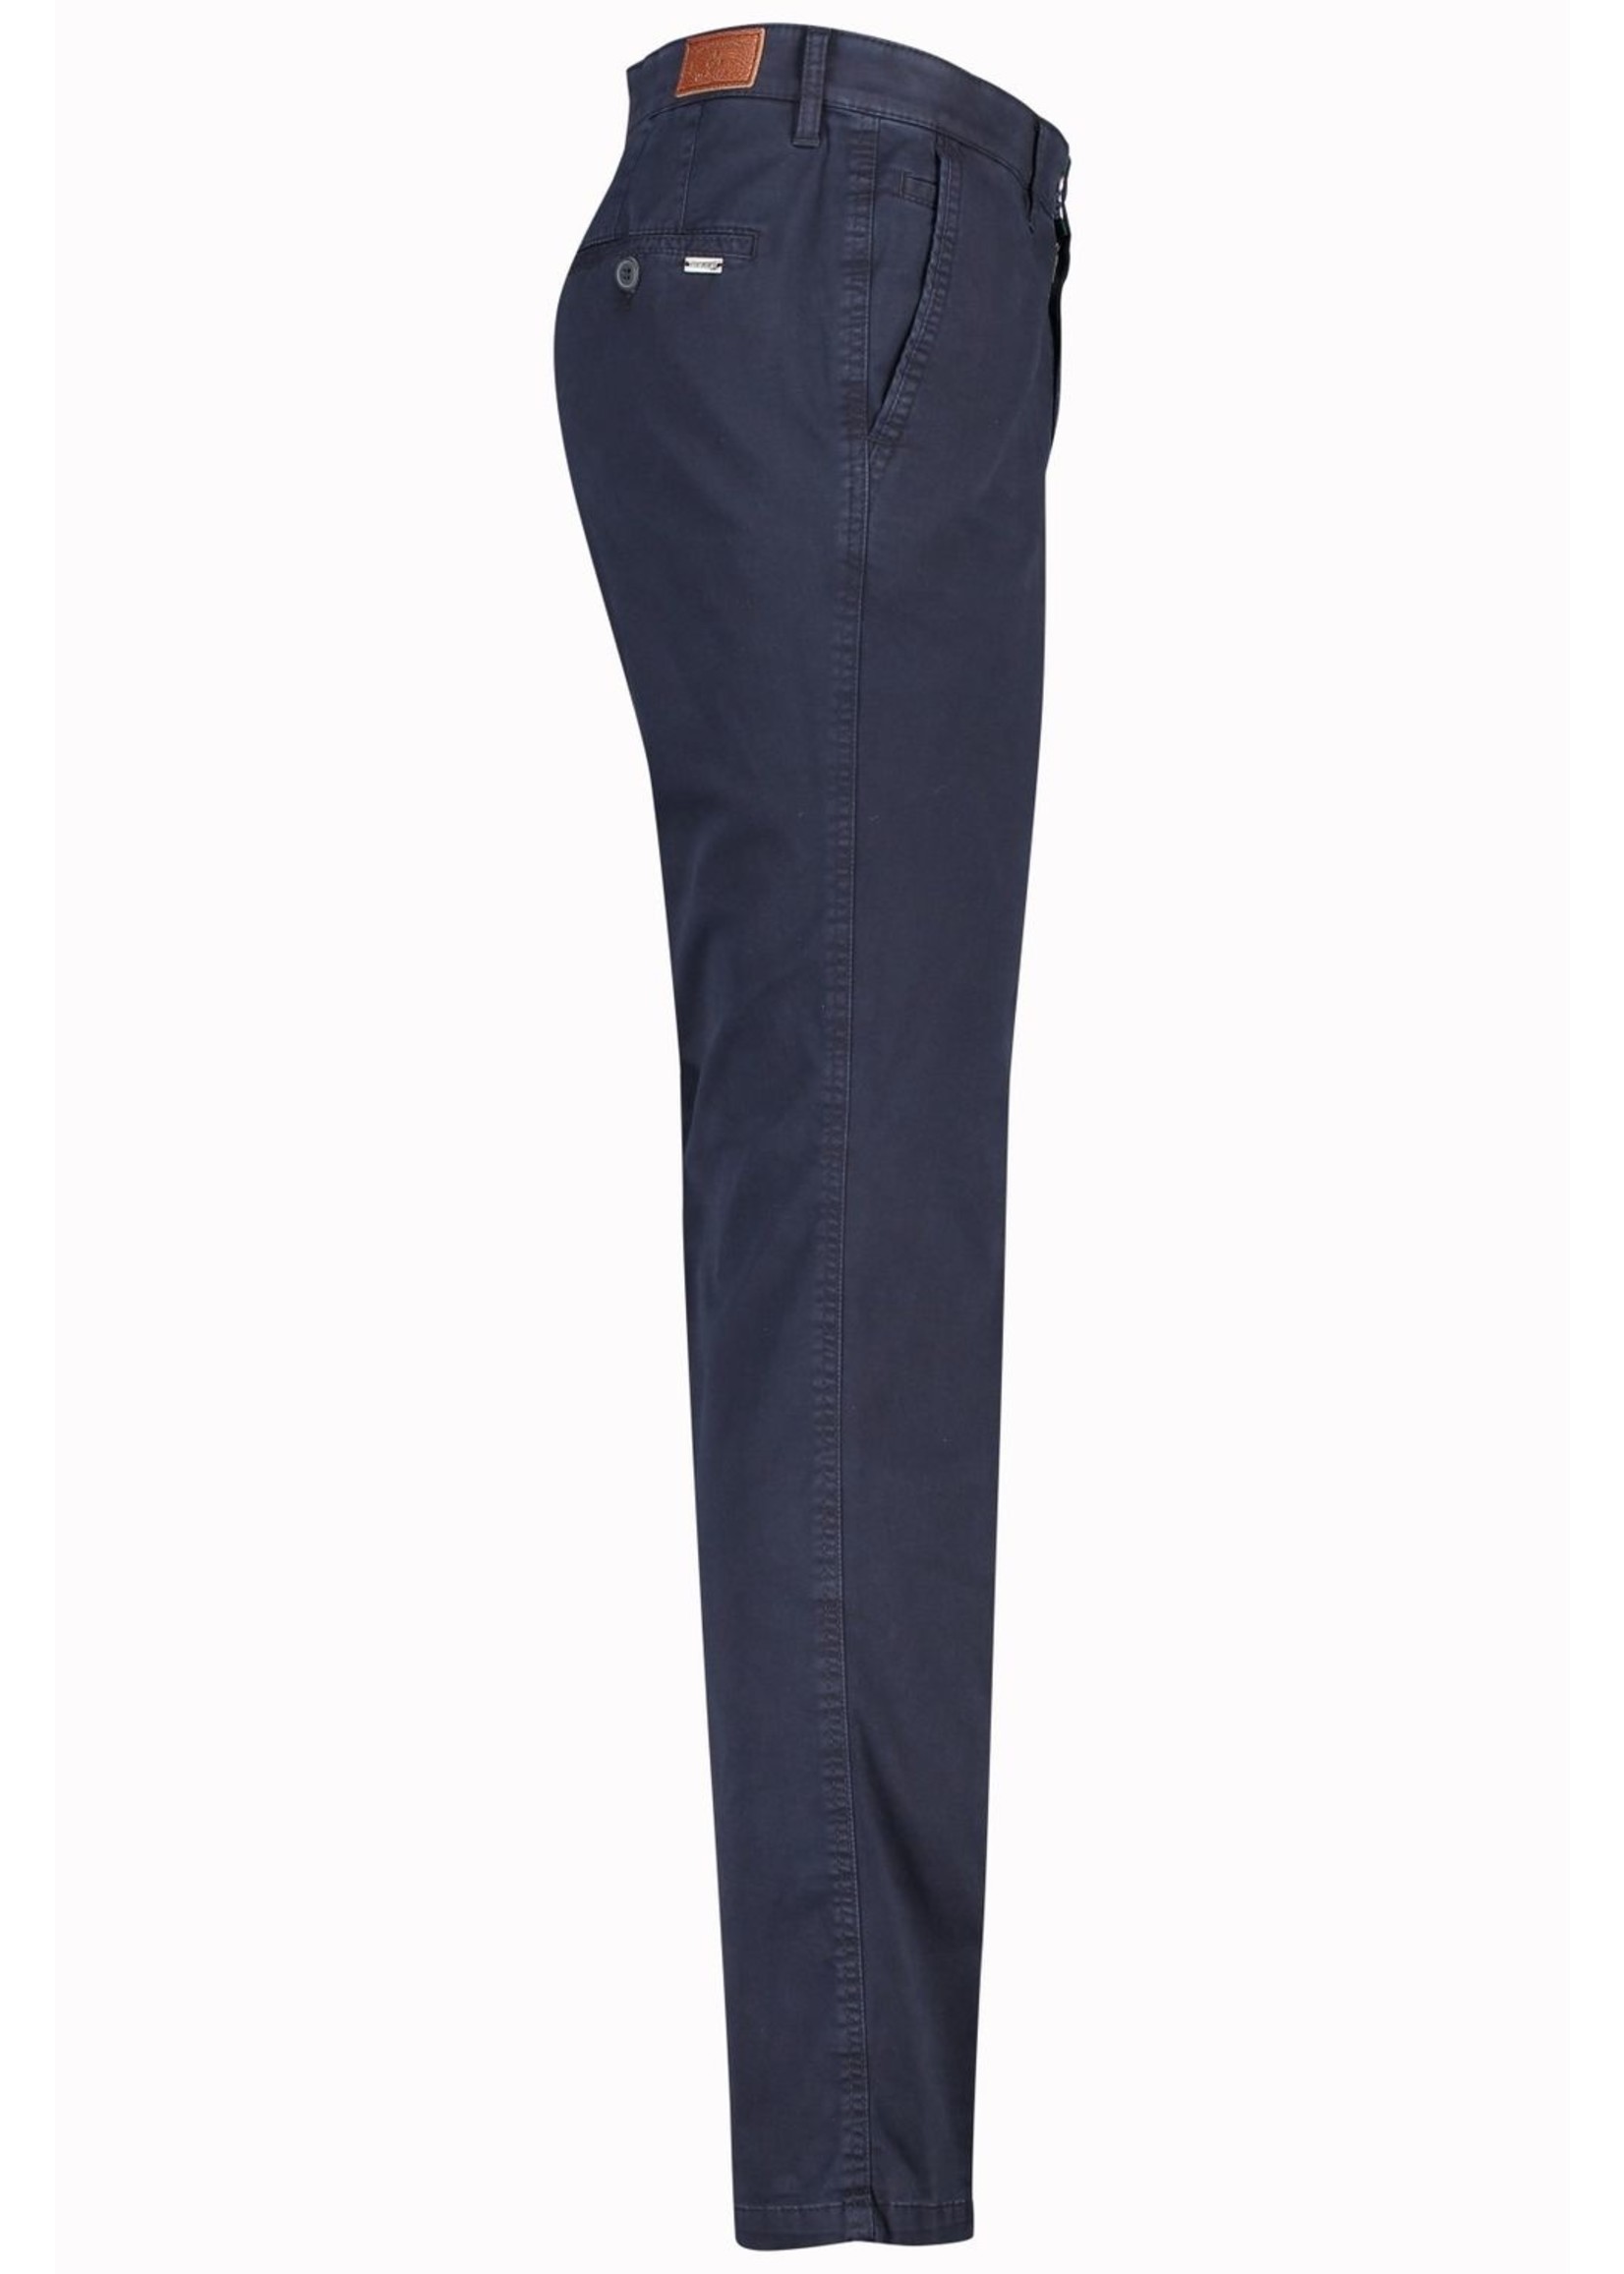 M.E.N.S. Pantalon en coton extensible uni style Madison-4800